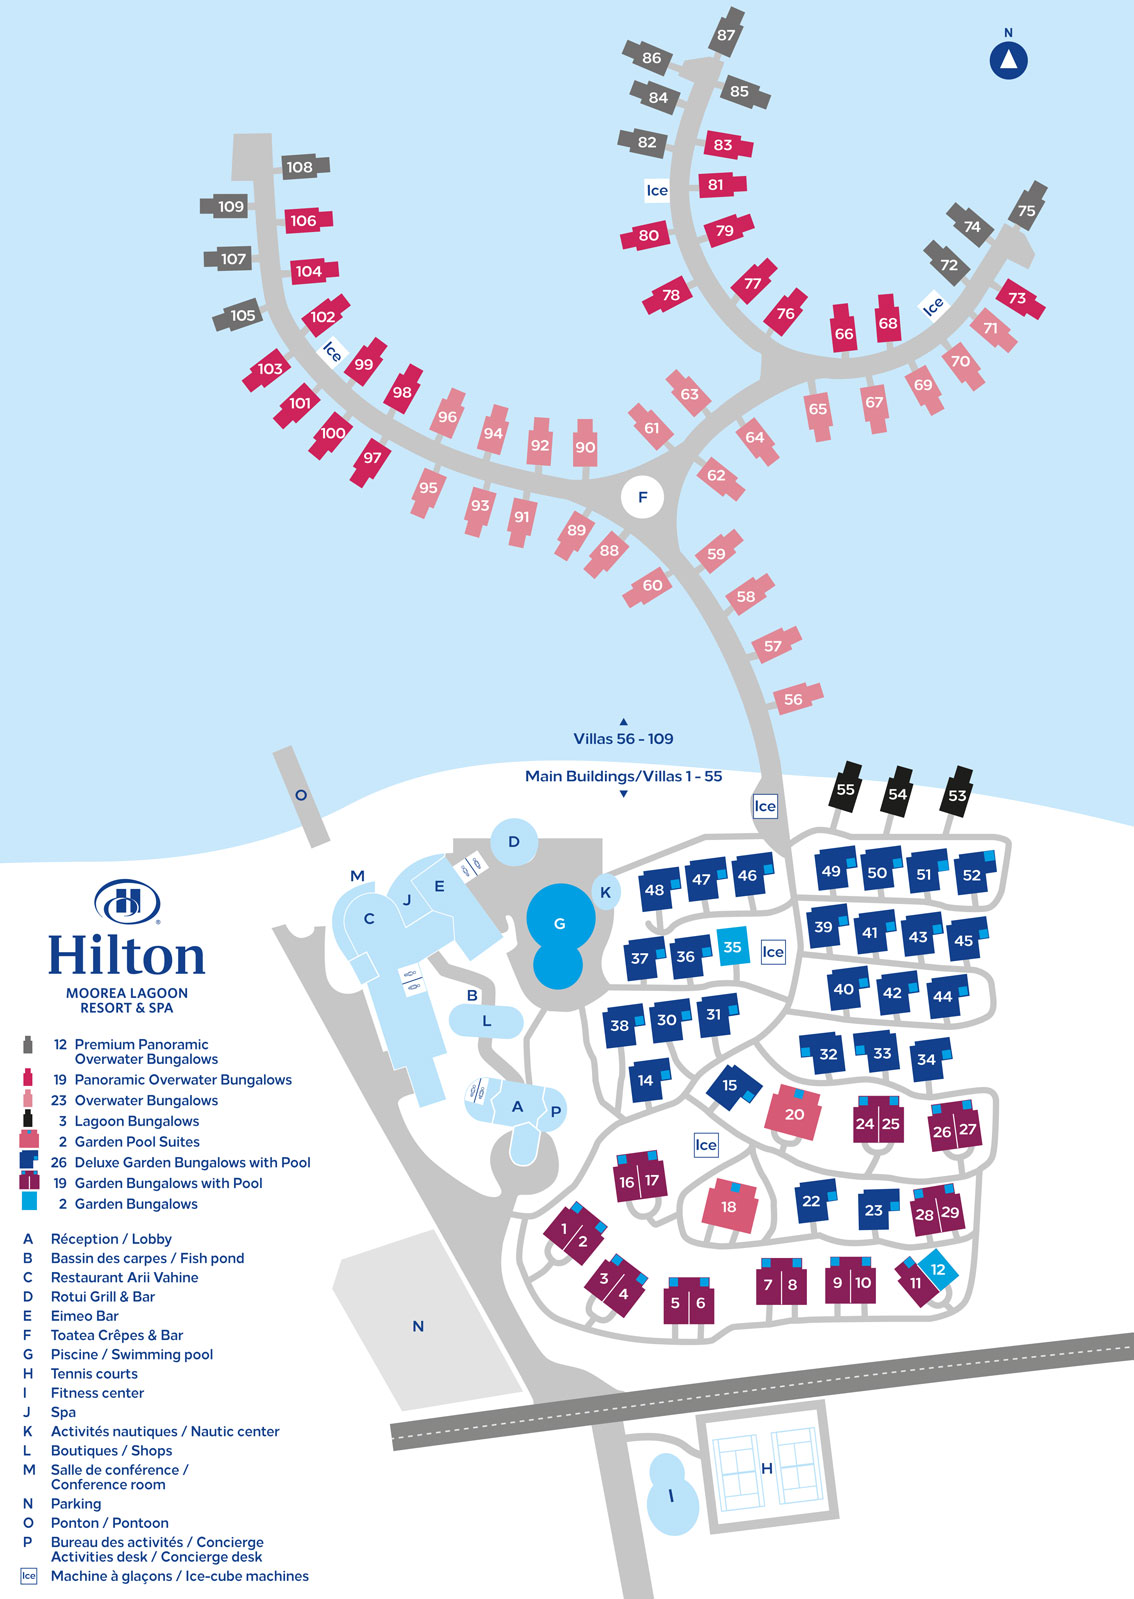 Hilton Moorea Lagoon Resort & Spa Deals | Pacific for Less